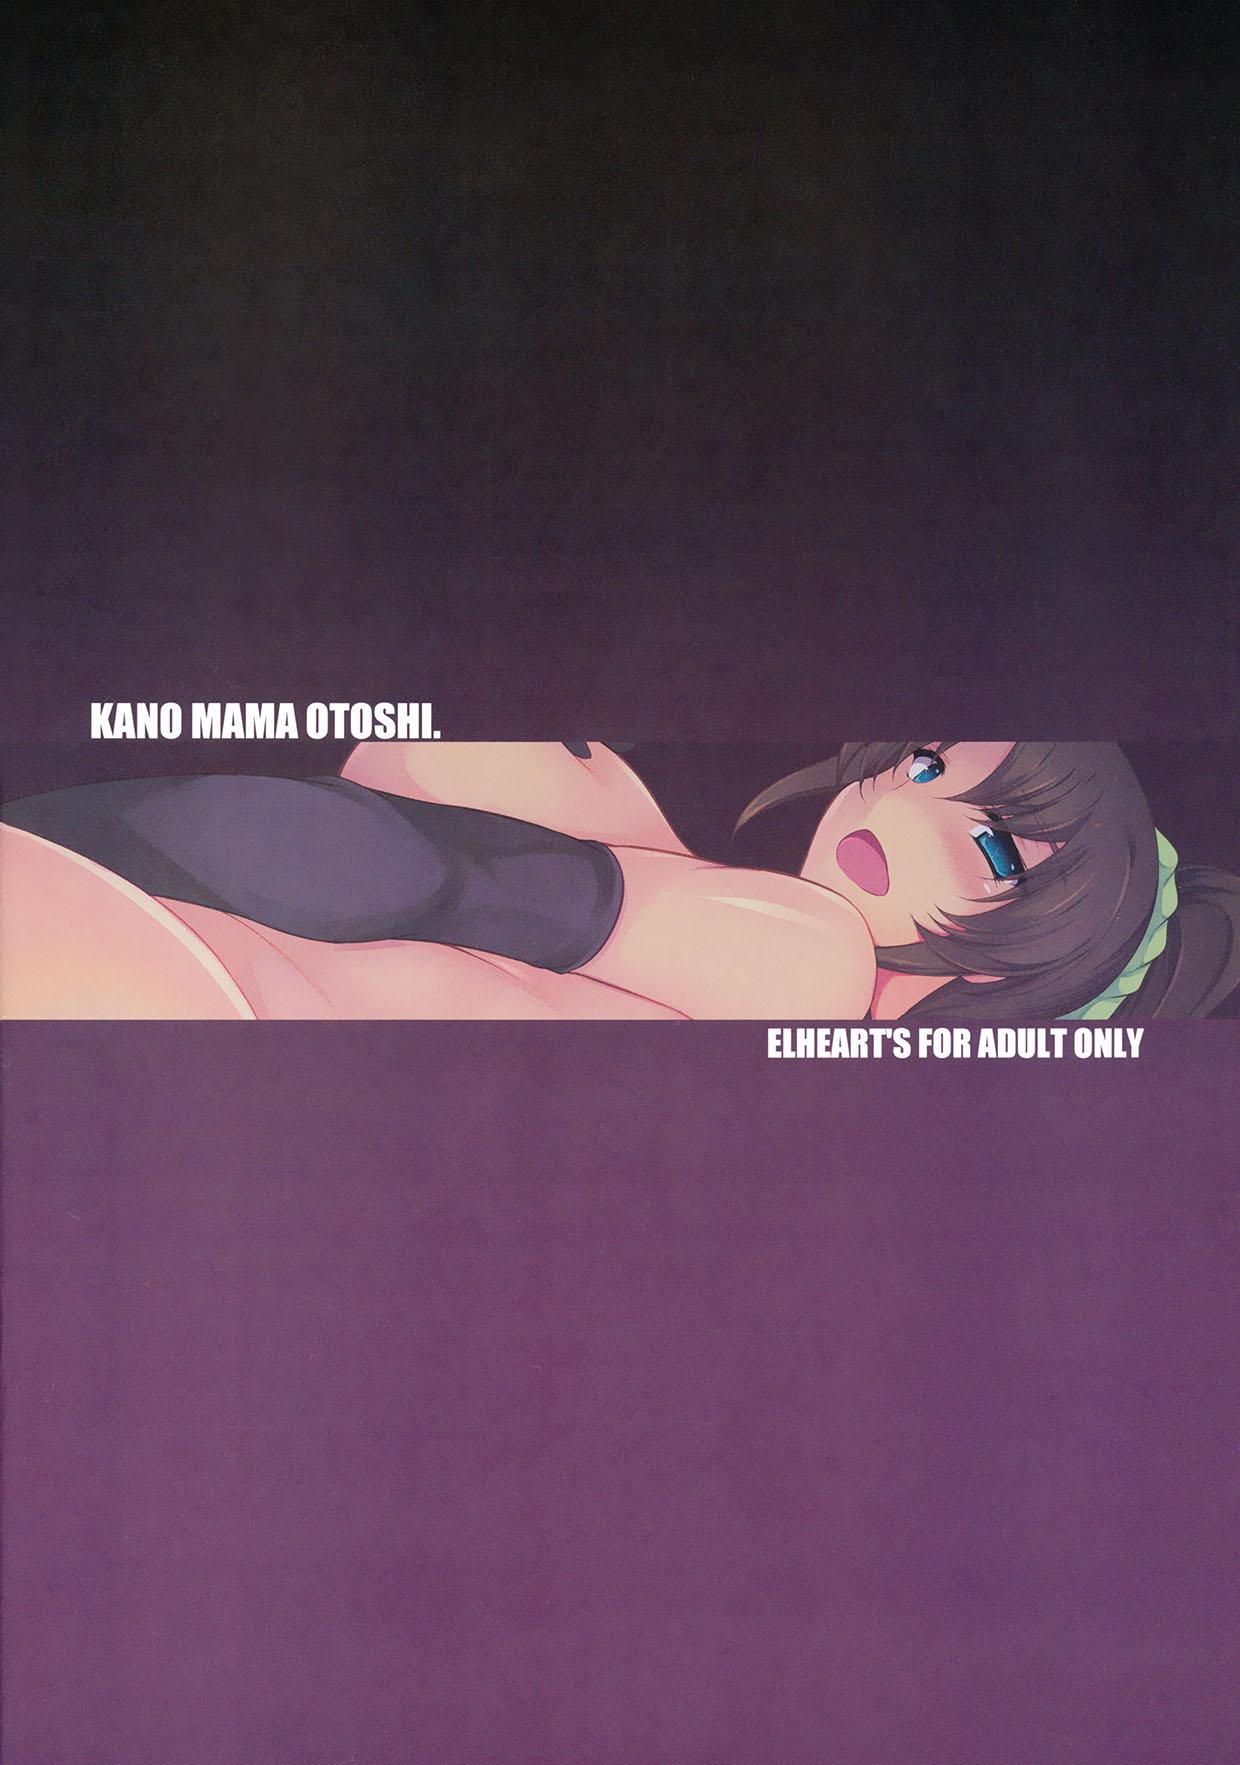 Kano Mama Otoshi. | My Girlfriend's Mom Has Fallen To Pleasure. 21